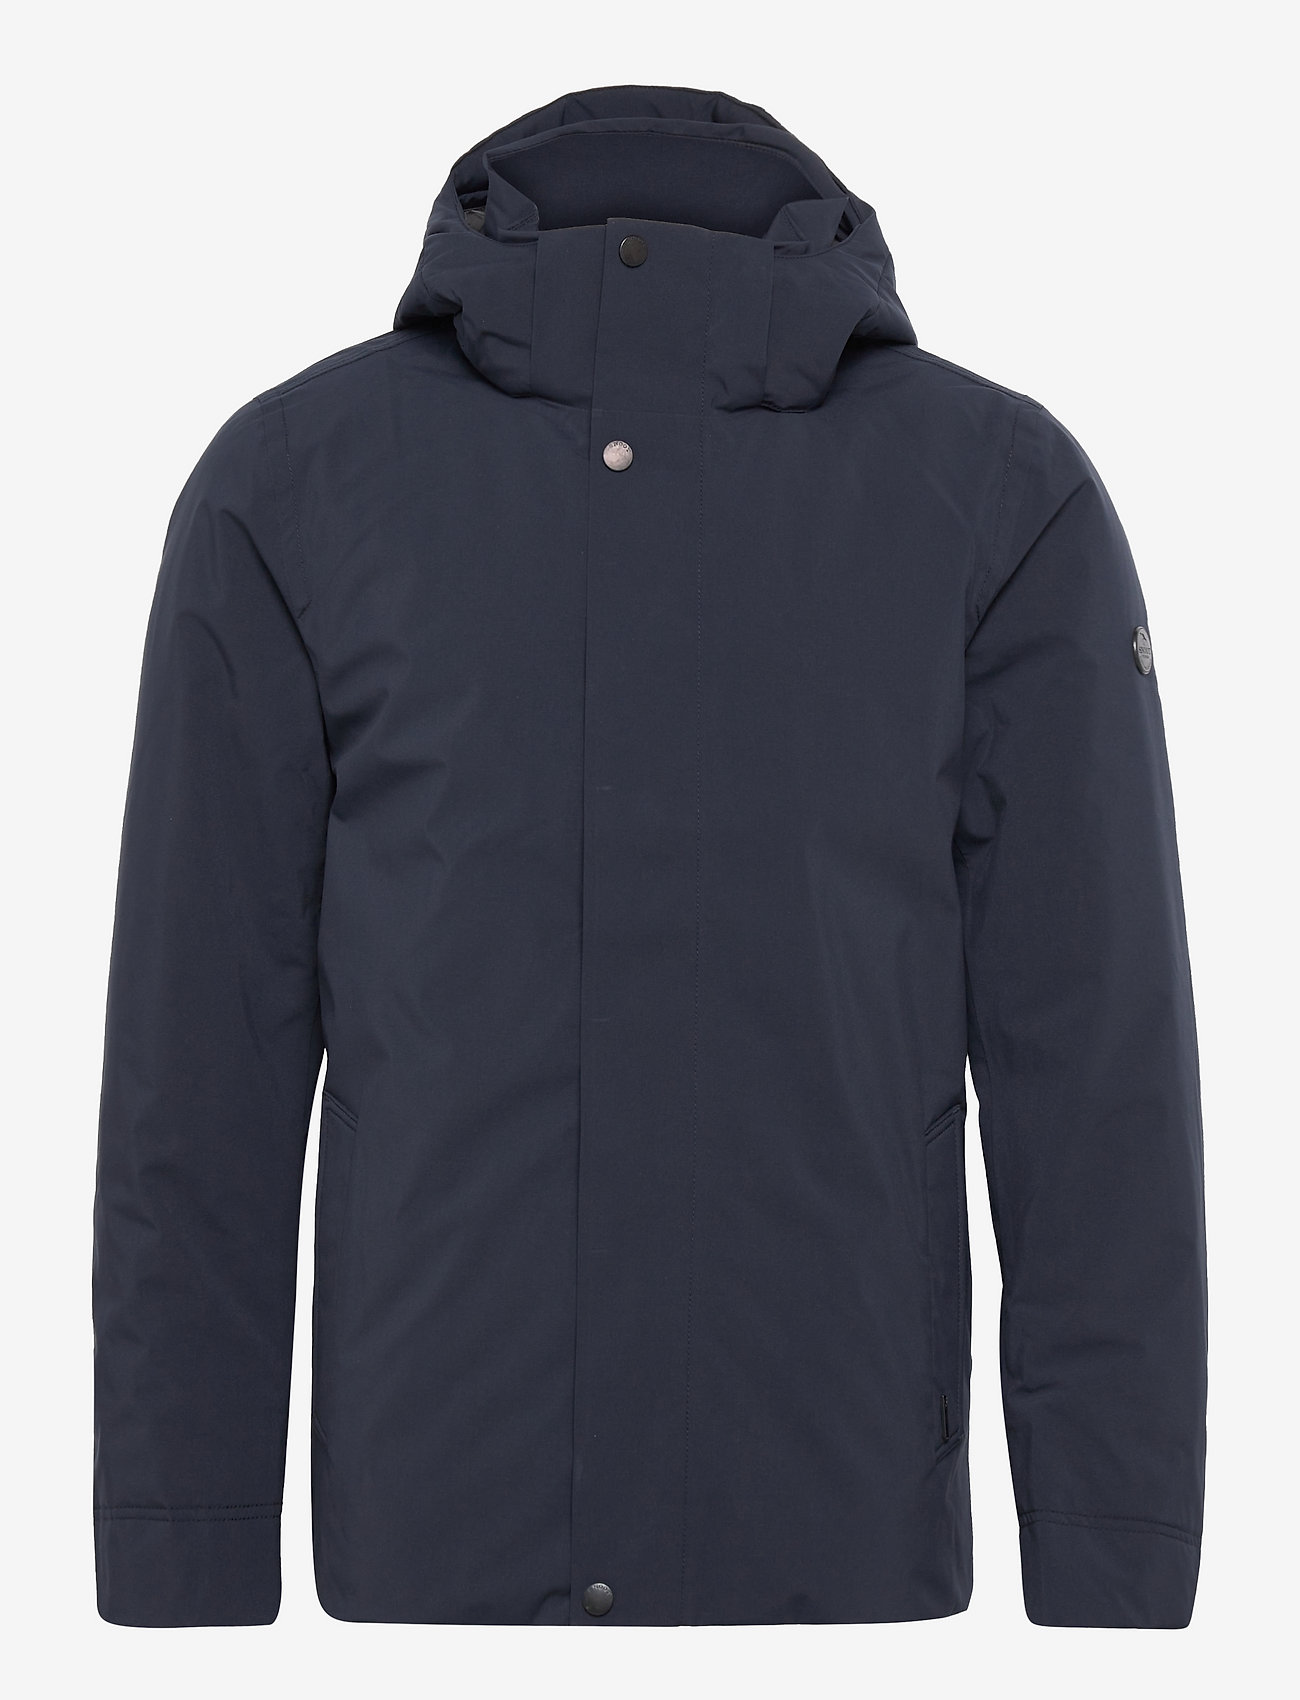 SNOOT - PRAIANO JKT M - winter jackets - navy - 0